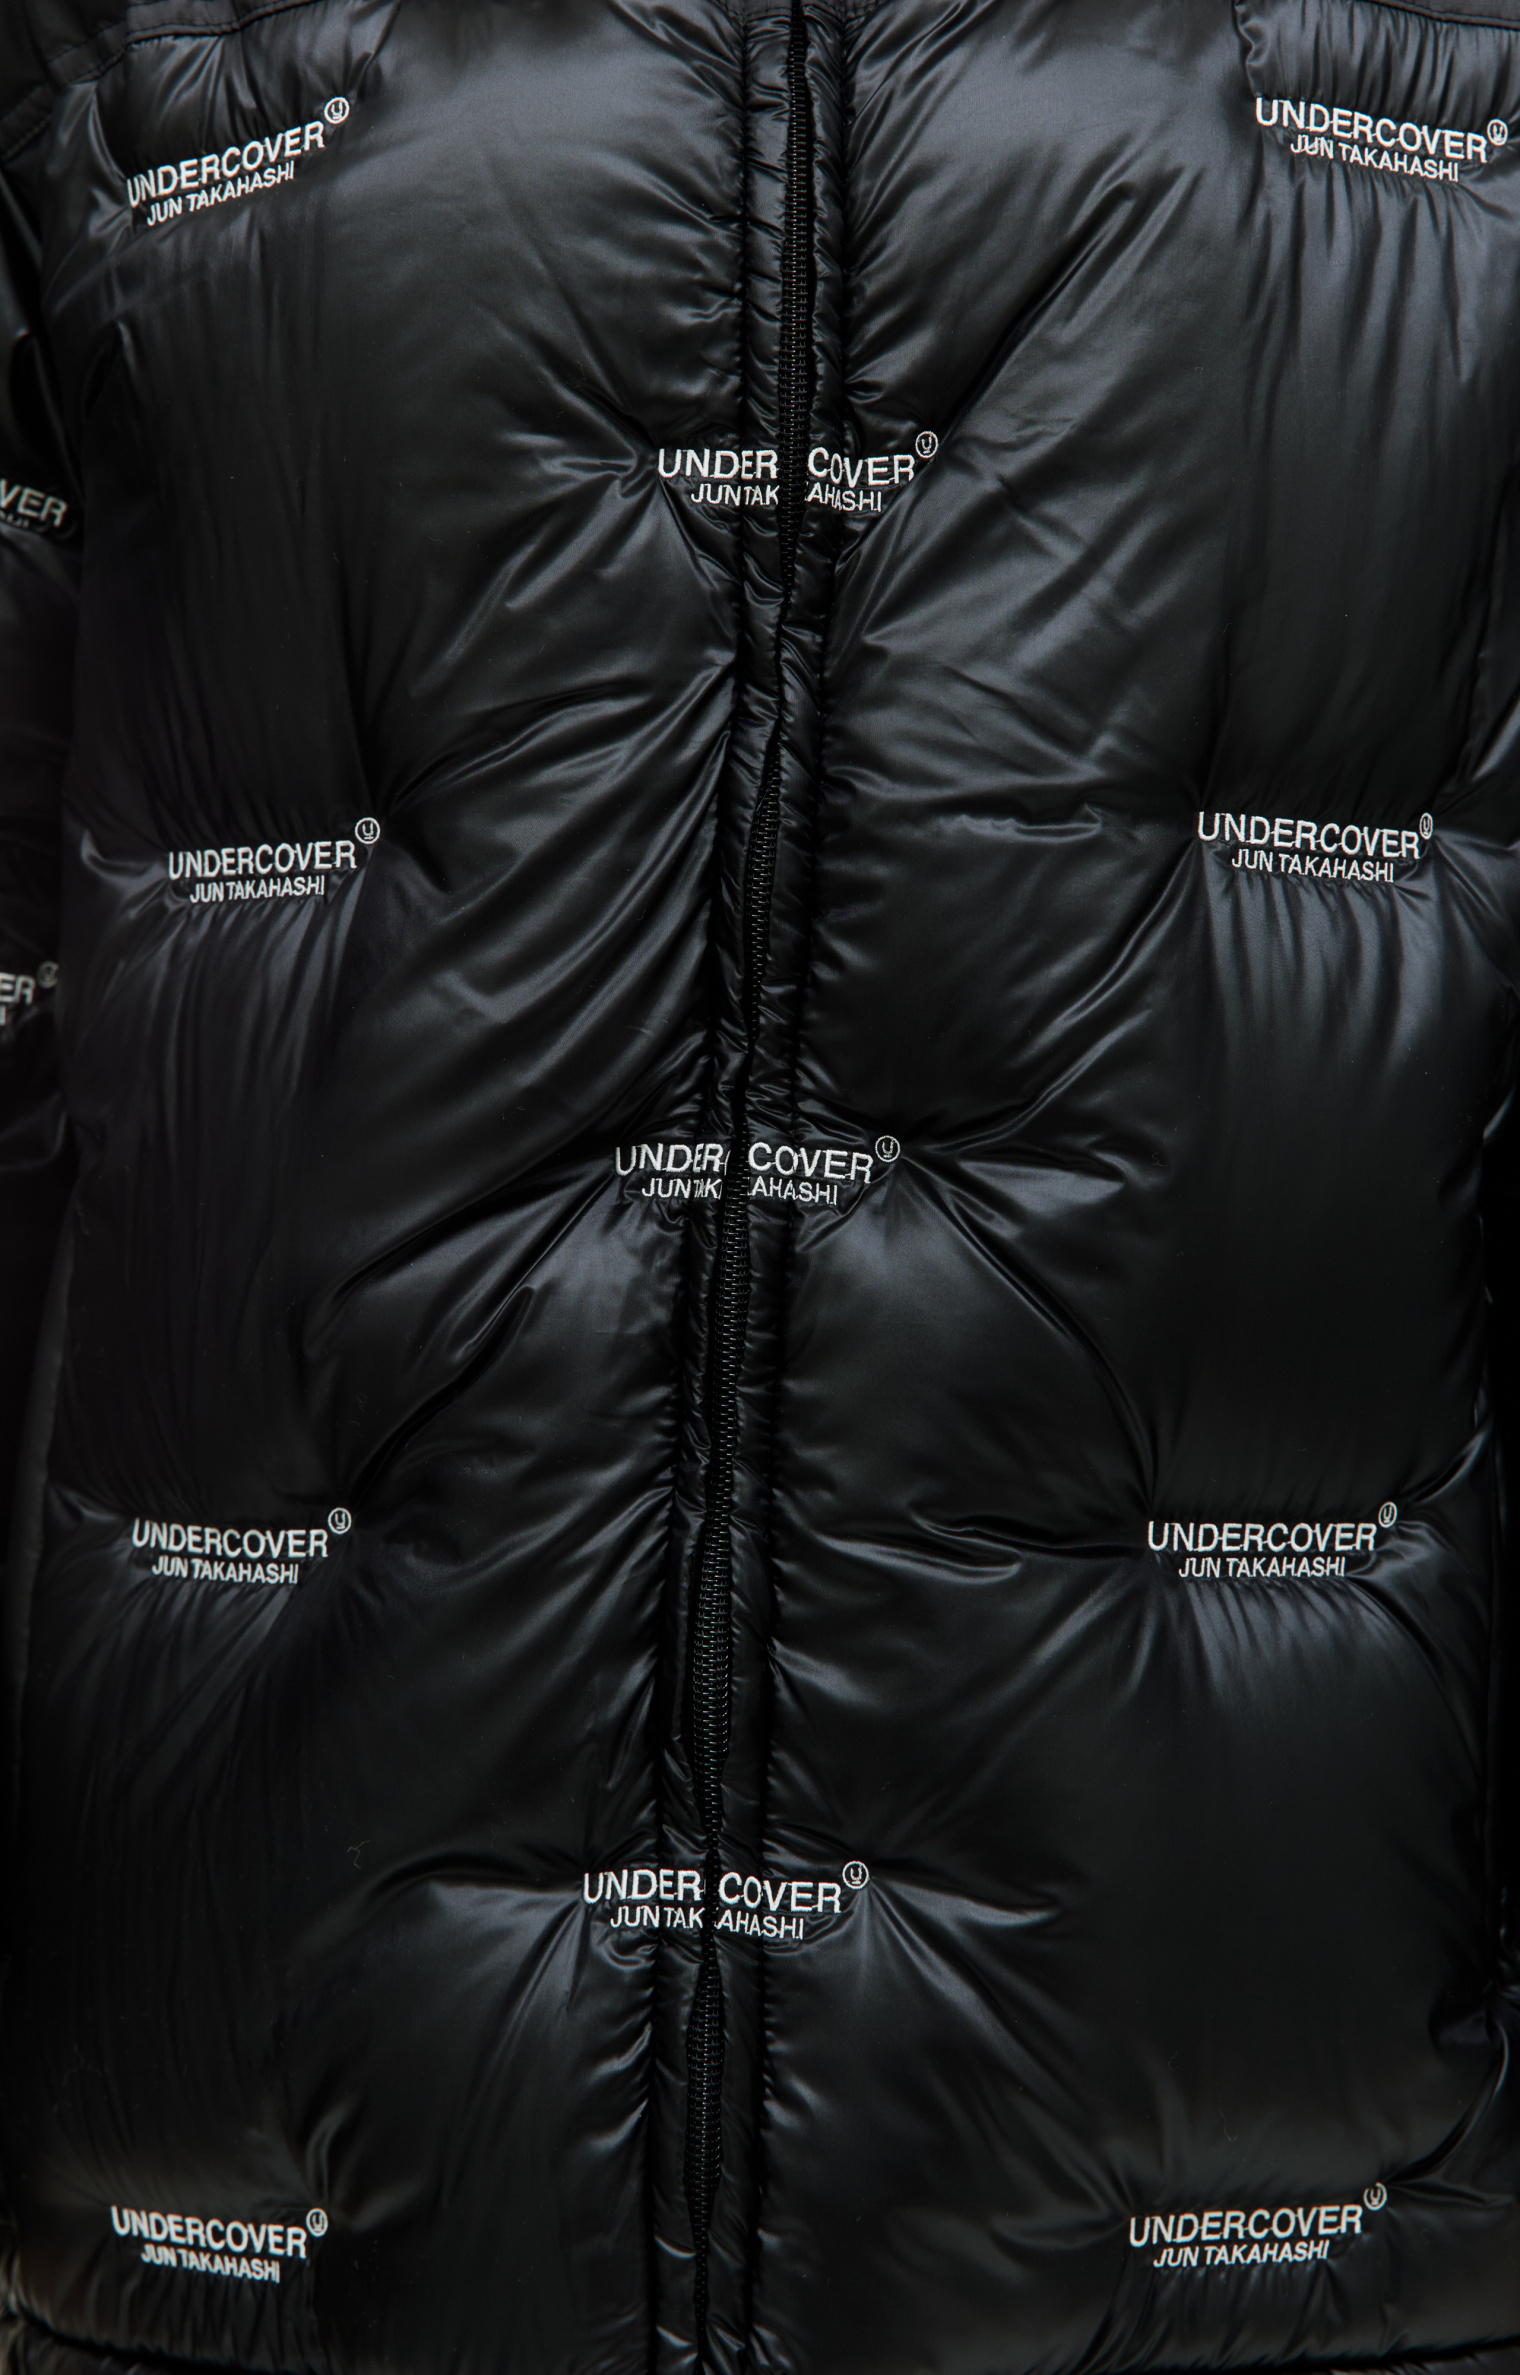 Undercover UNDERCOVER x fragment design down jacket